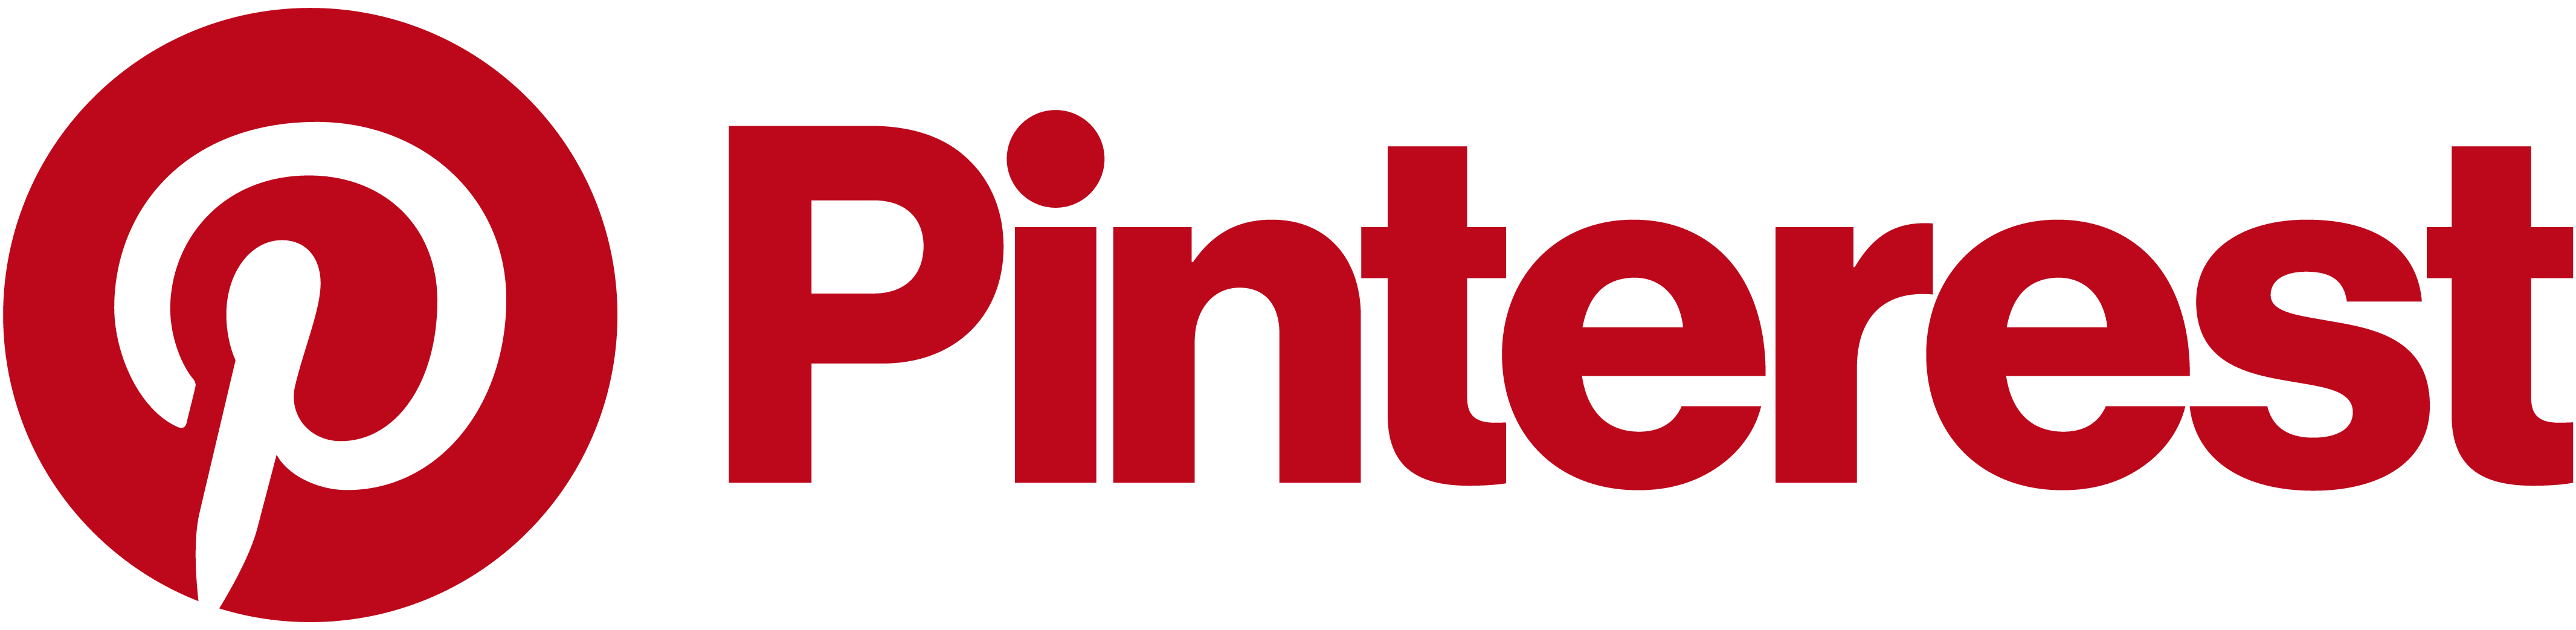 Pinterest Wort-Logo